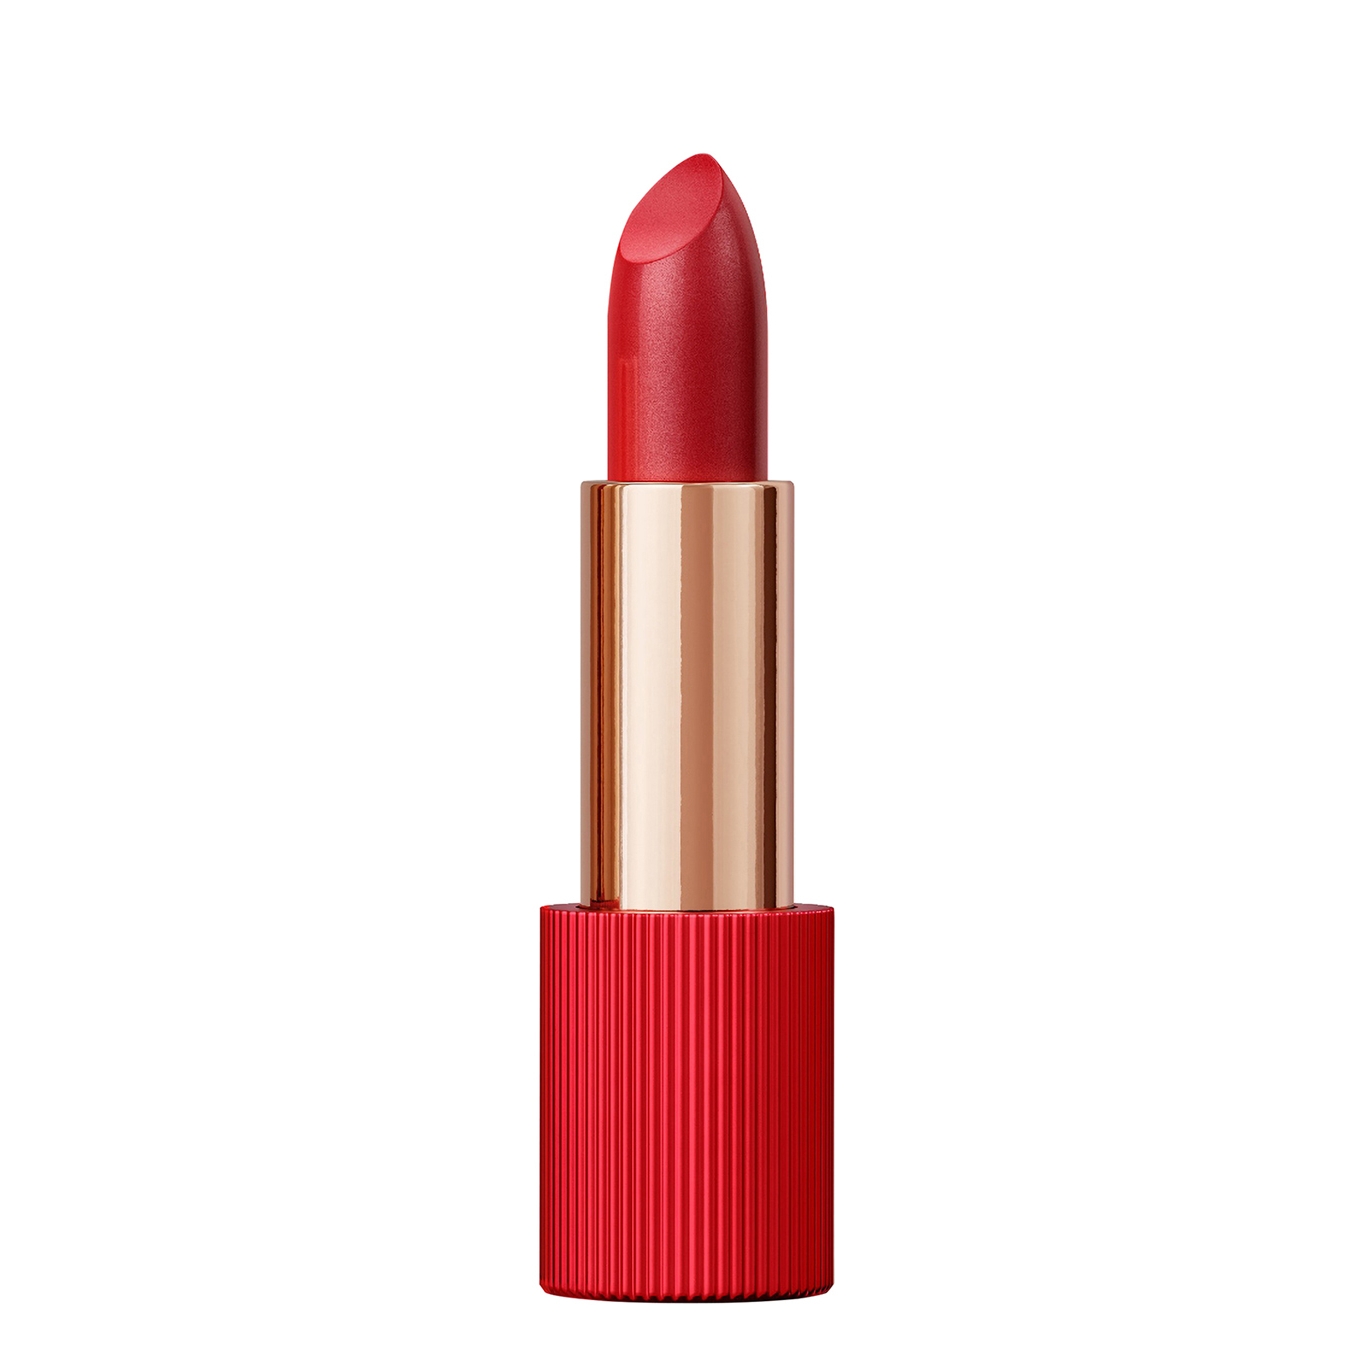 La Perla Beauty Satin Lip Balm - Colour 201 Bitten Lips